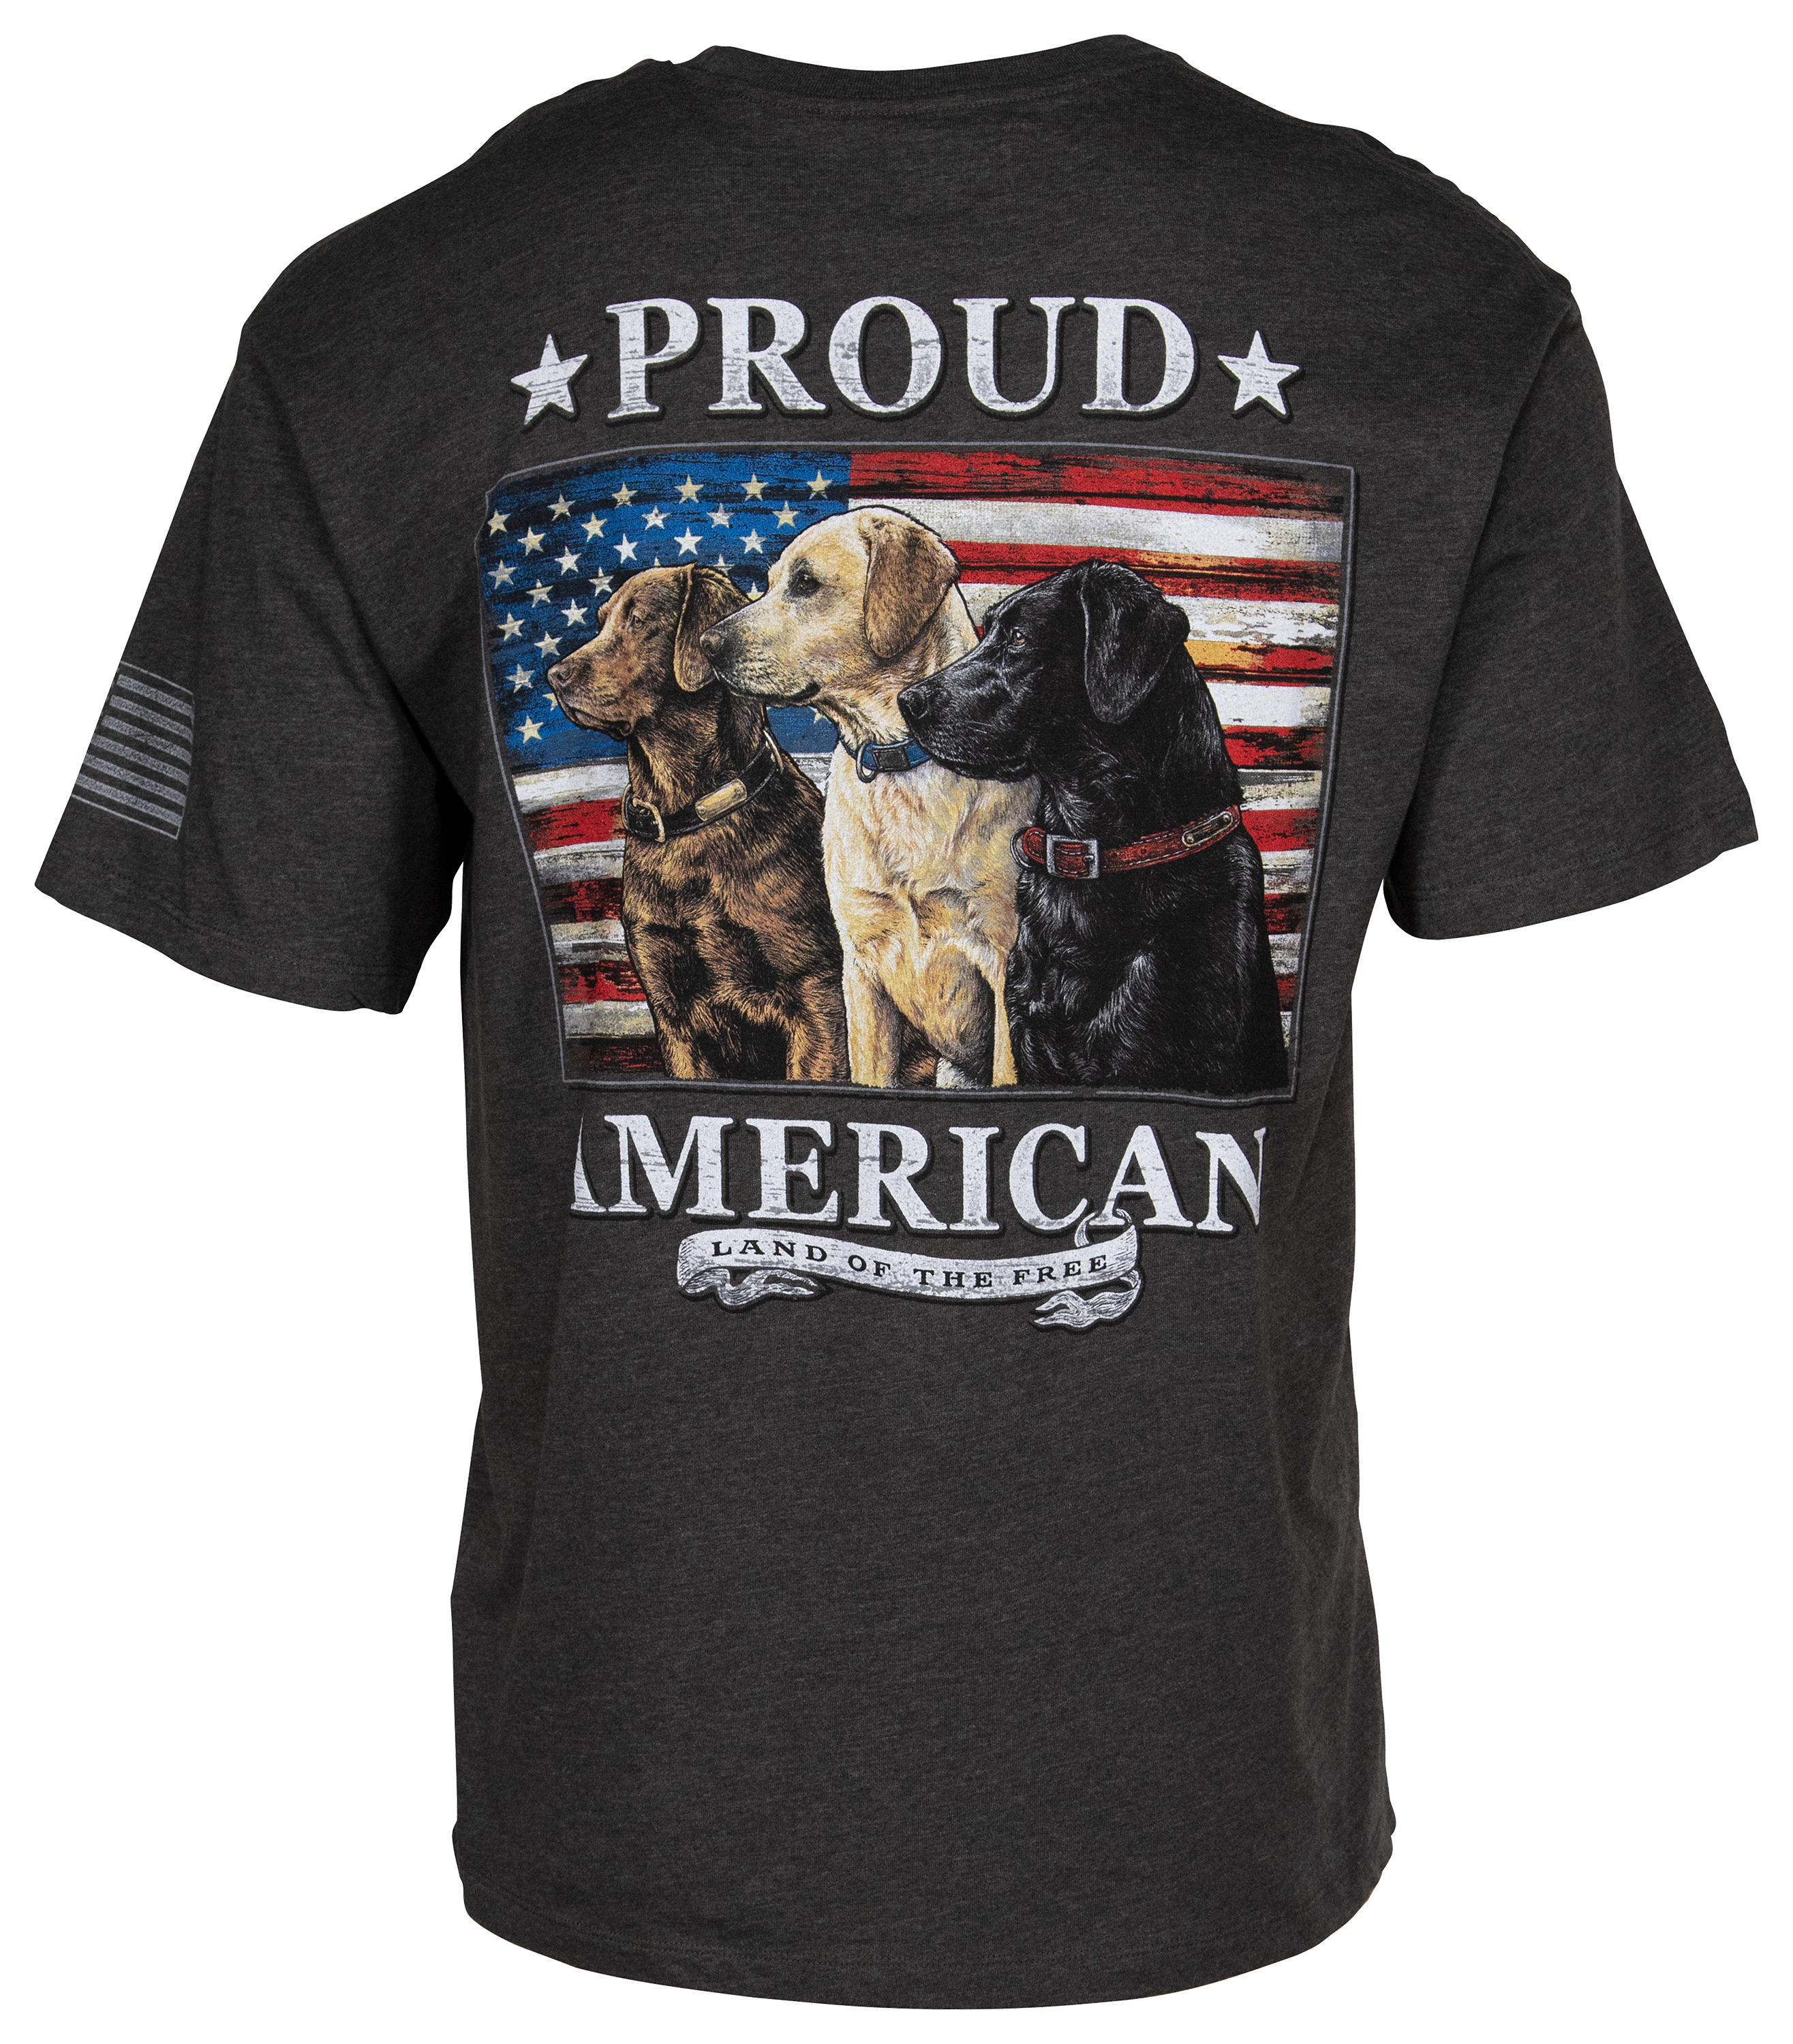 Bass Pro Shops Proud American Short-Sleeve T-Shirt for Men - Charcoal Heather - M